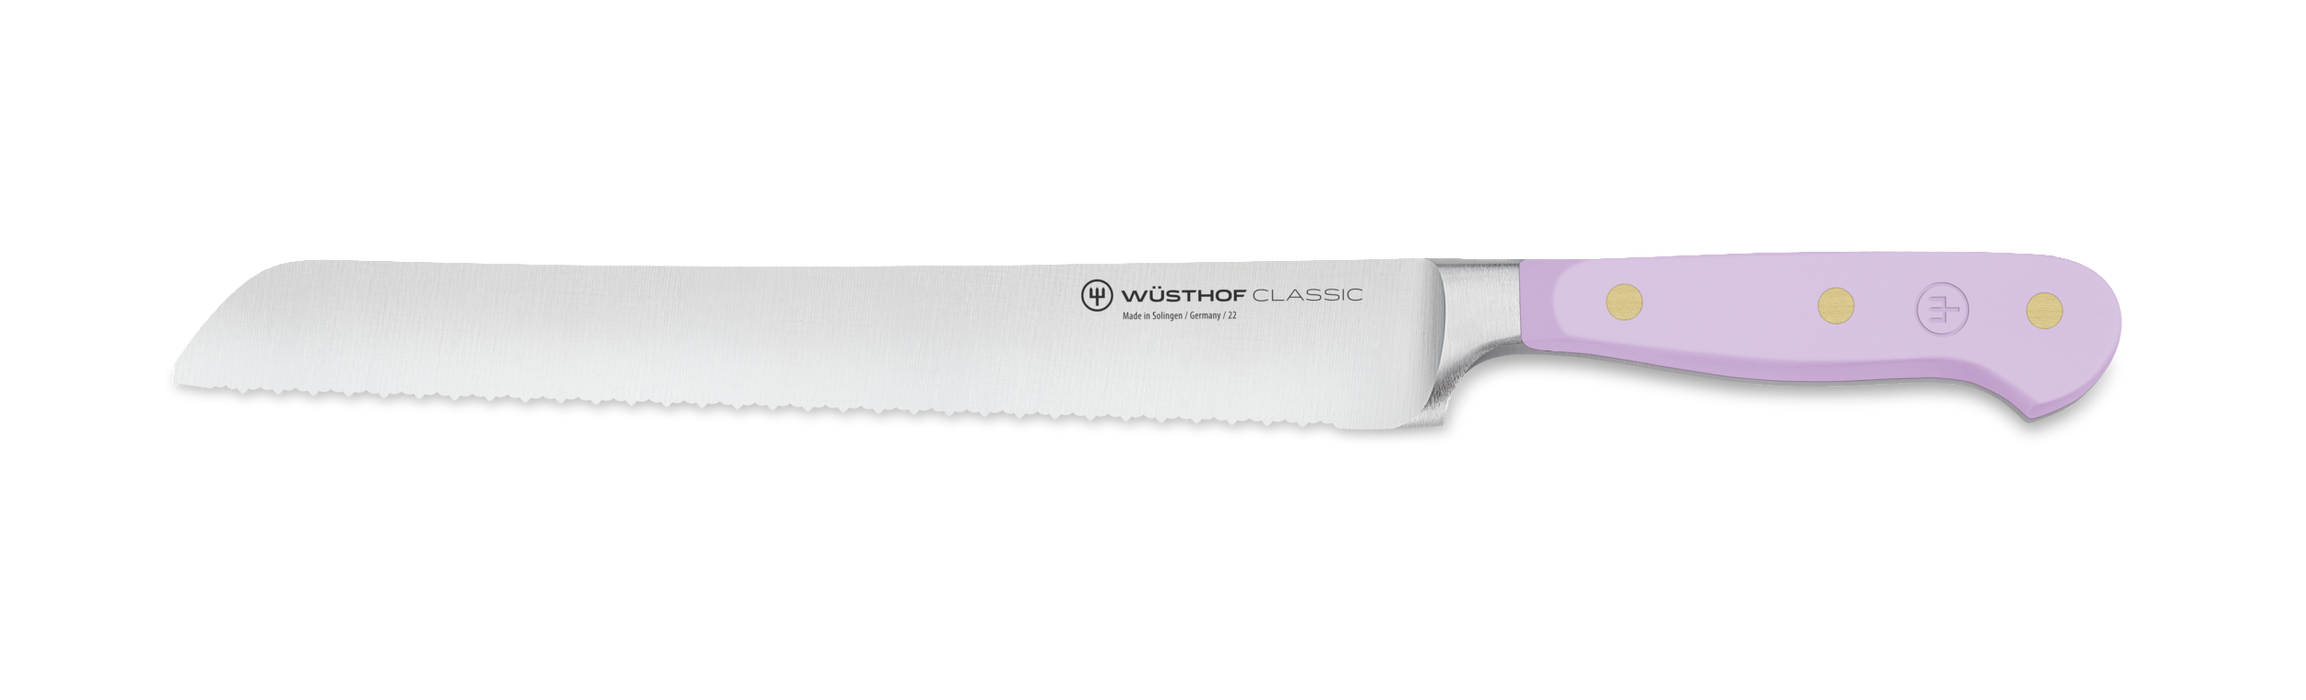 WUSTOF-TRIDENT OF AMERICA KNIFE BREAD CLASSIC PURPLE YAM 9IN